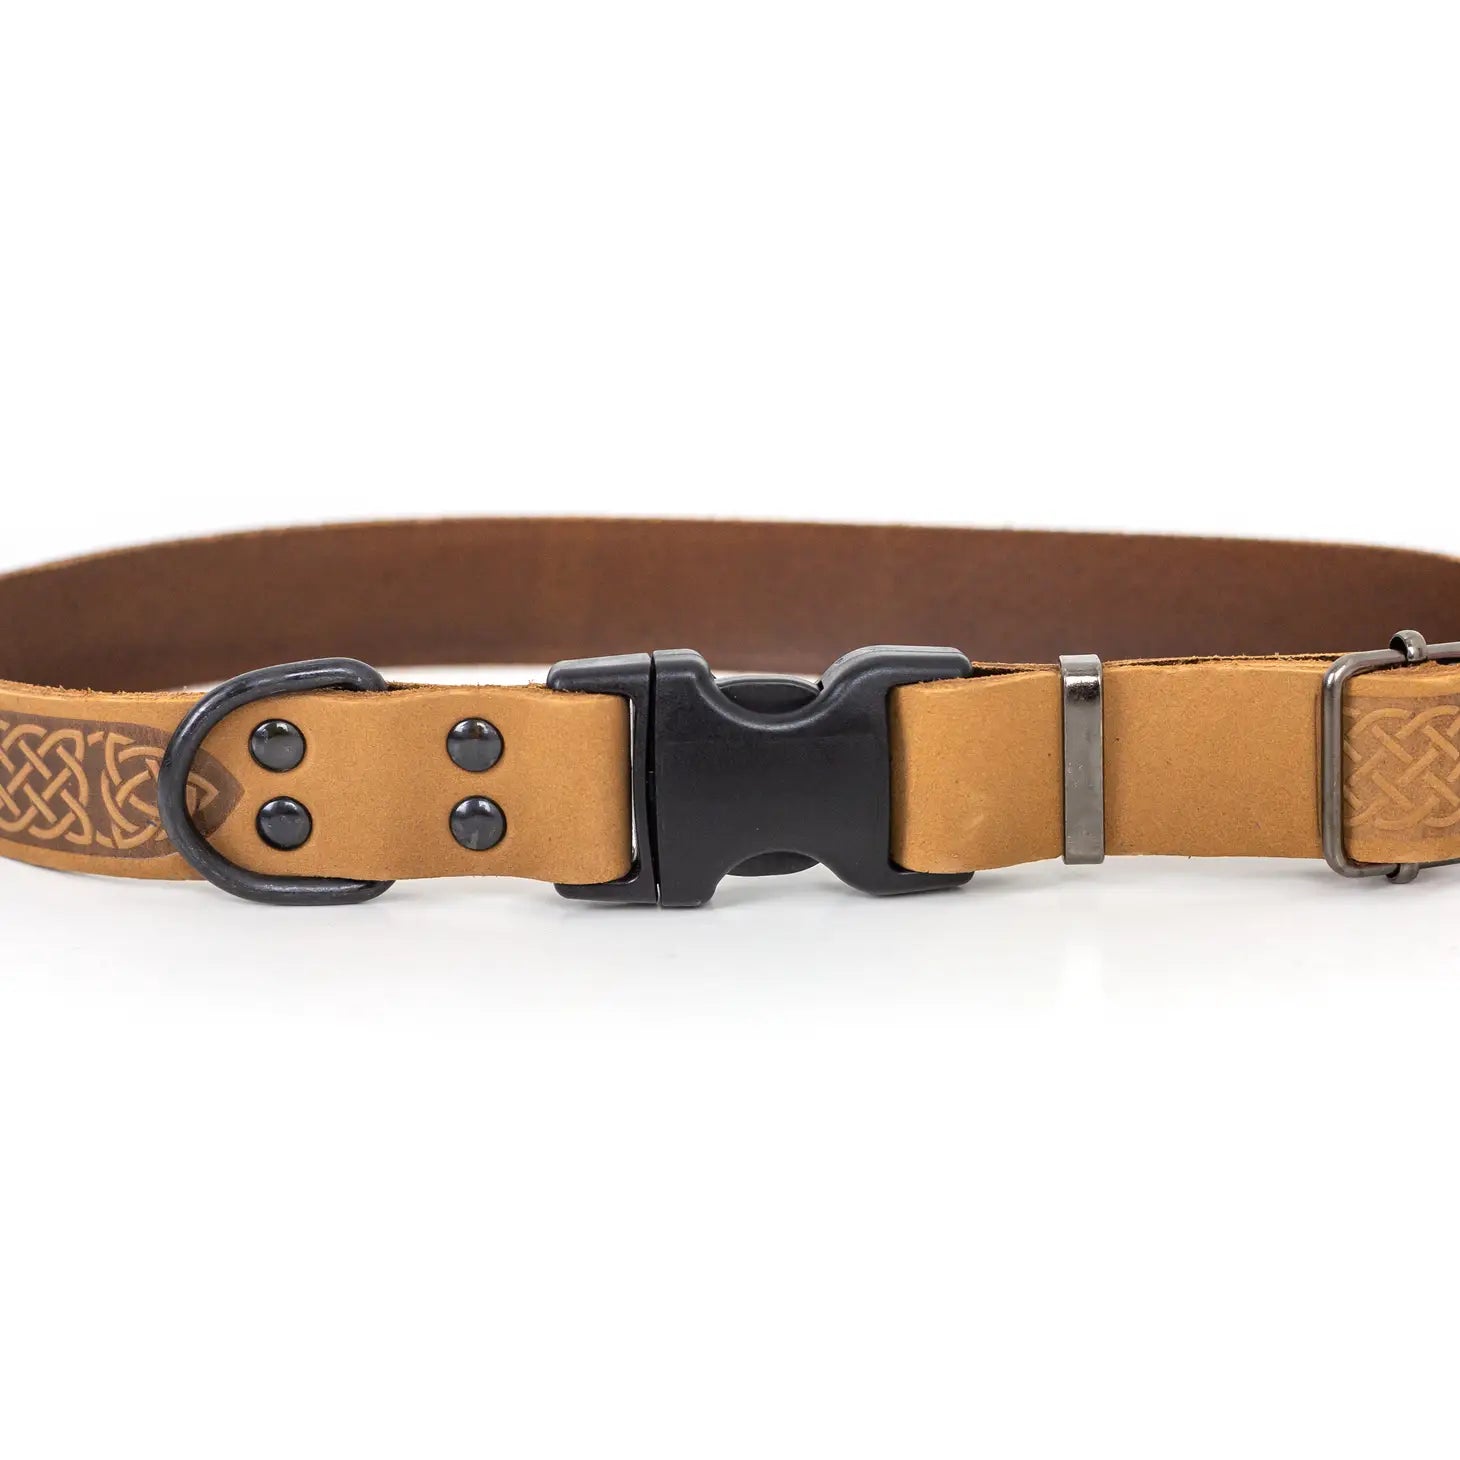 Euro-Dog Genuine Leather Dog Collars